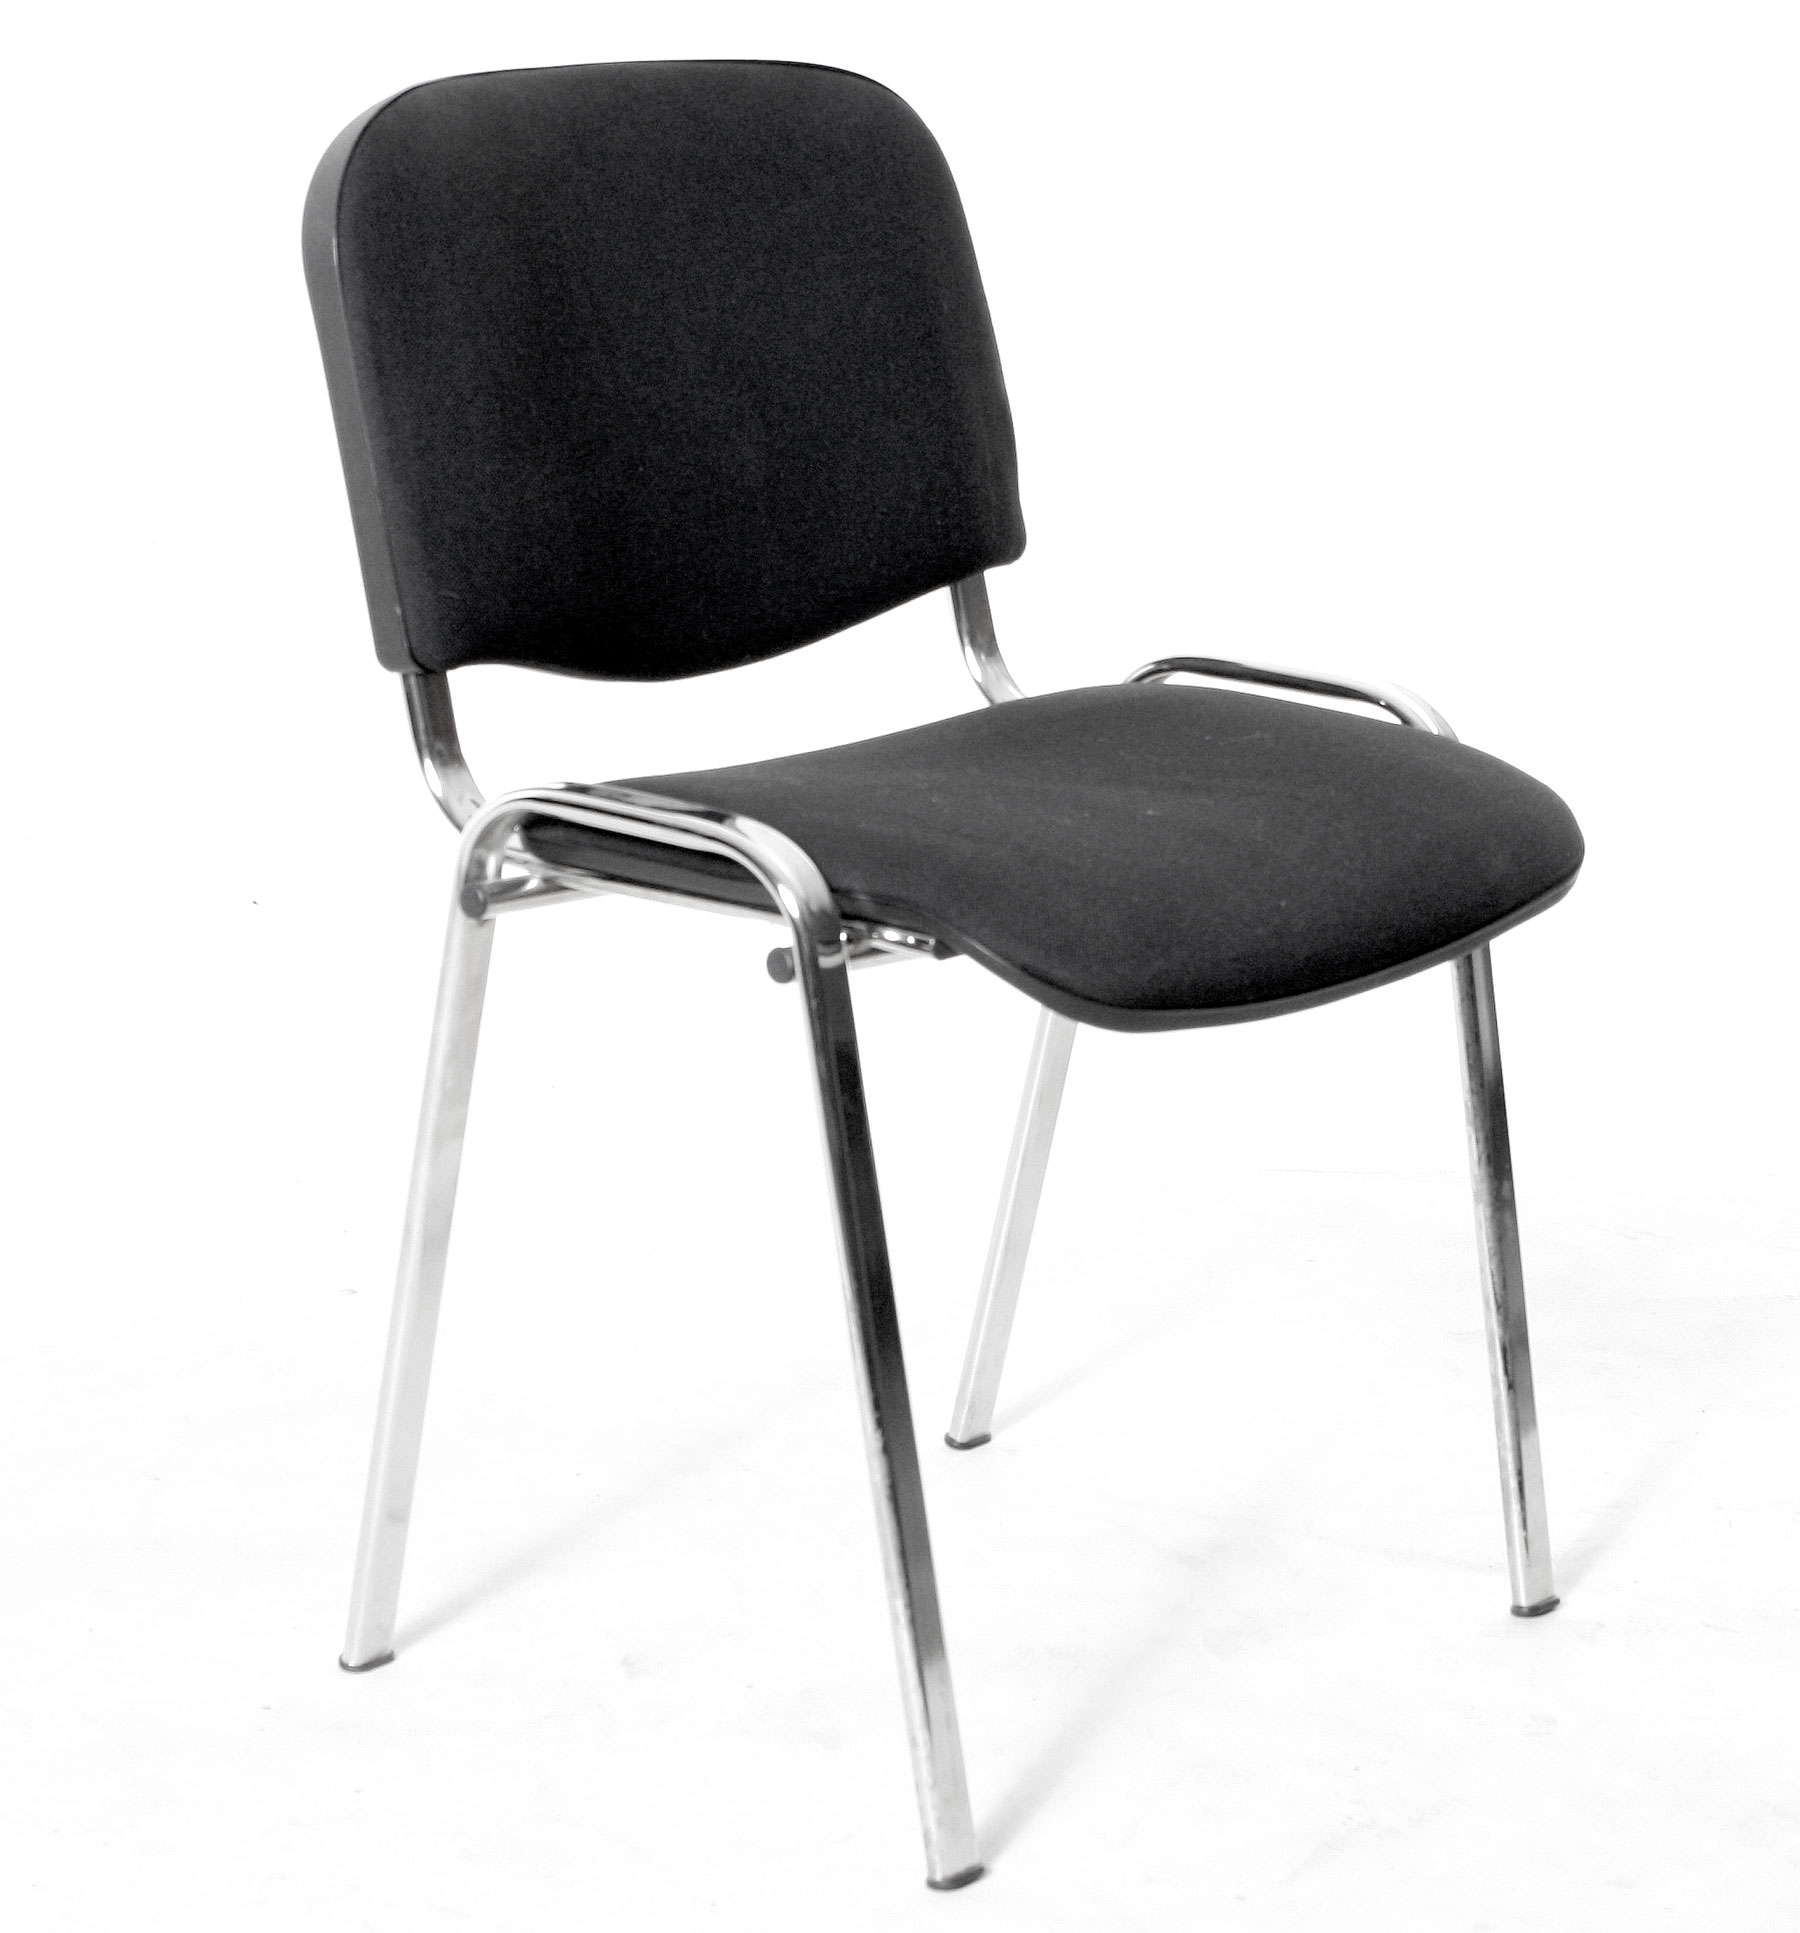 Stapelstuhl schwarz, 3er-SET, gebrauchte Büromöbel